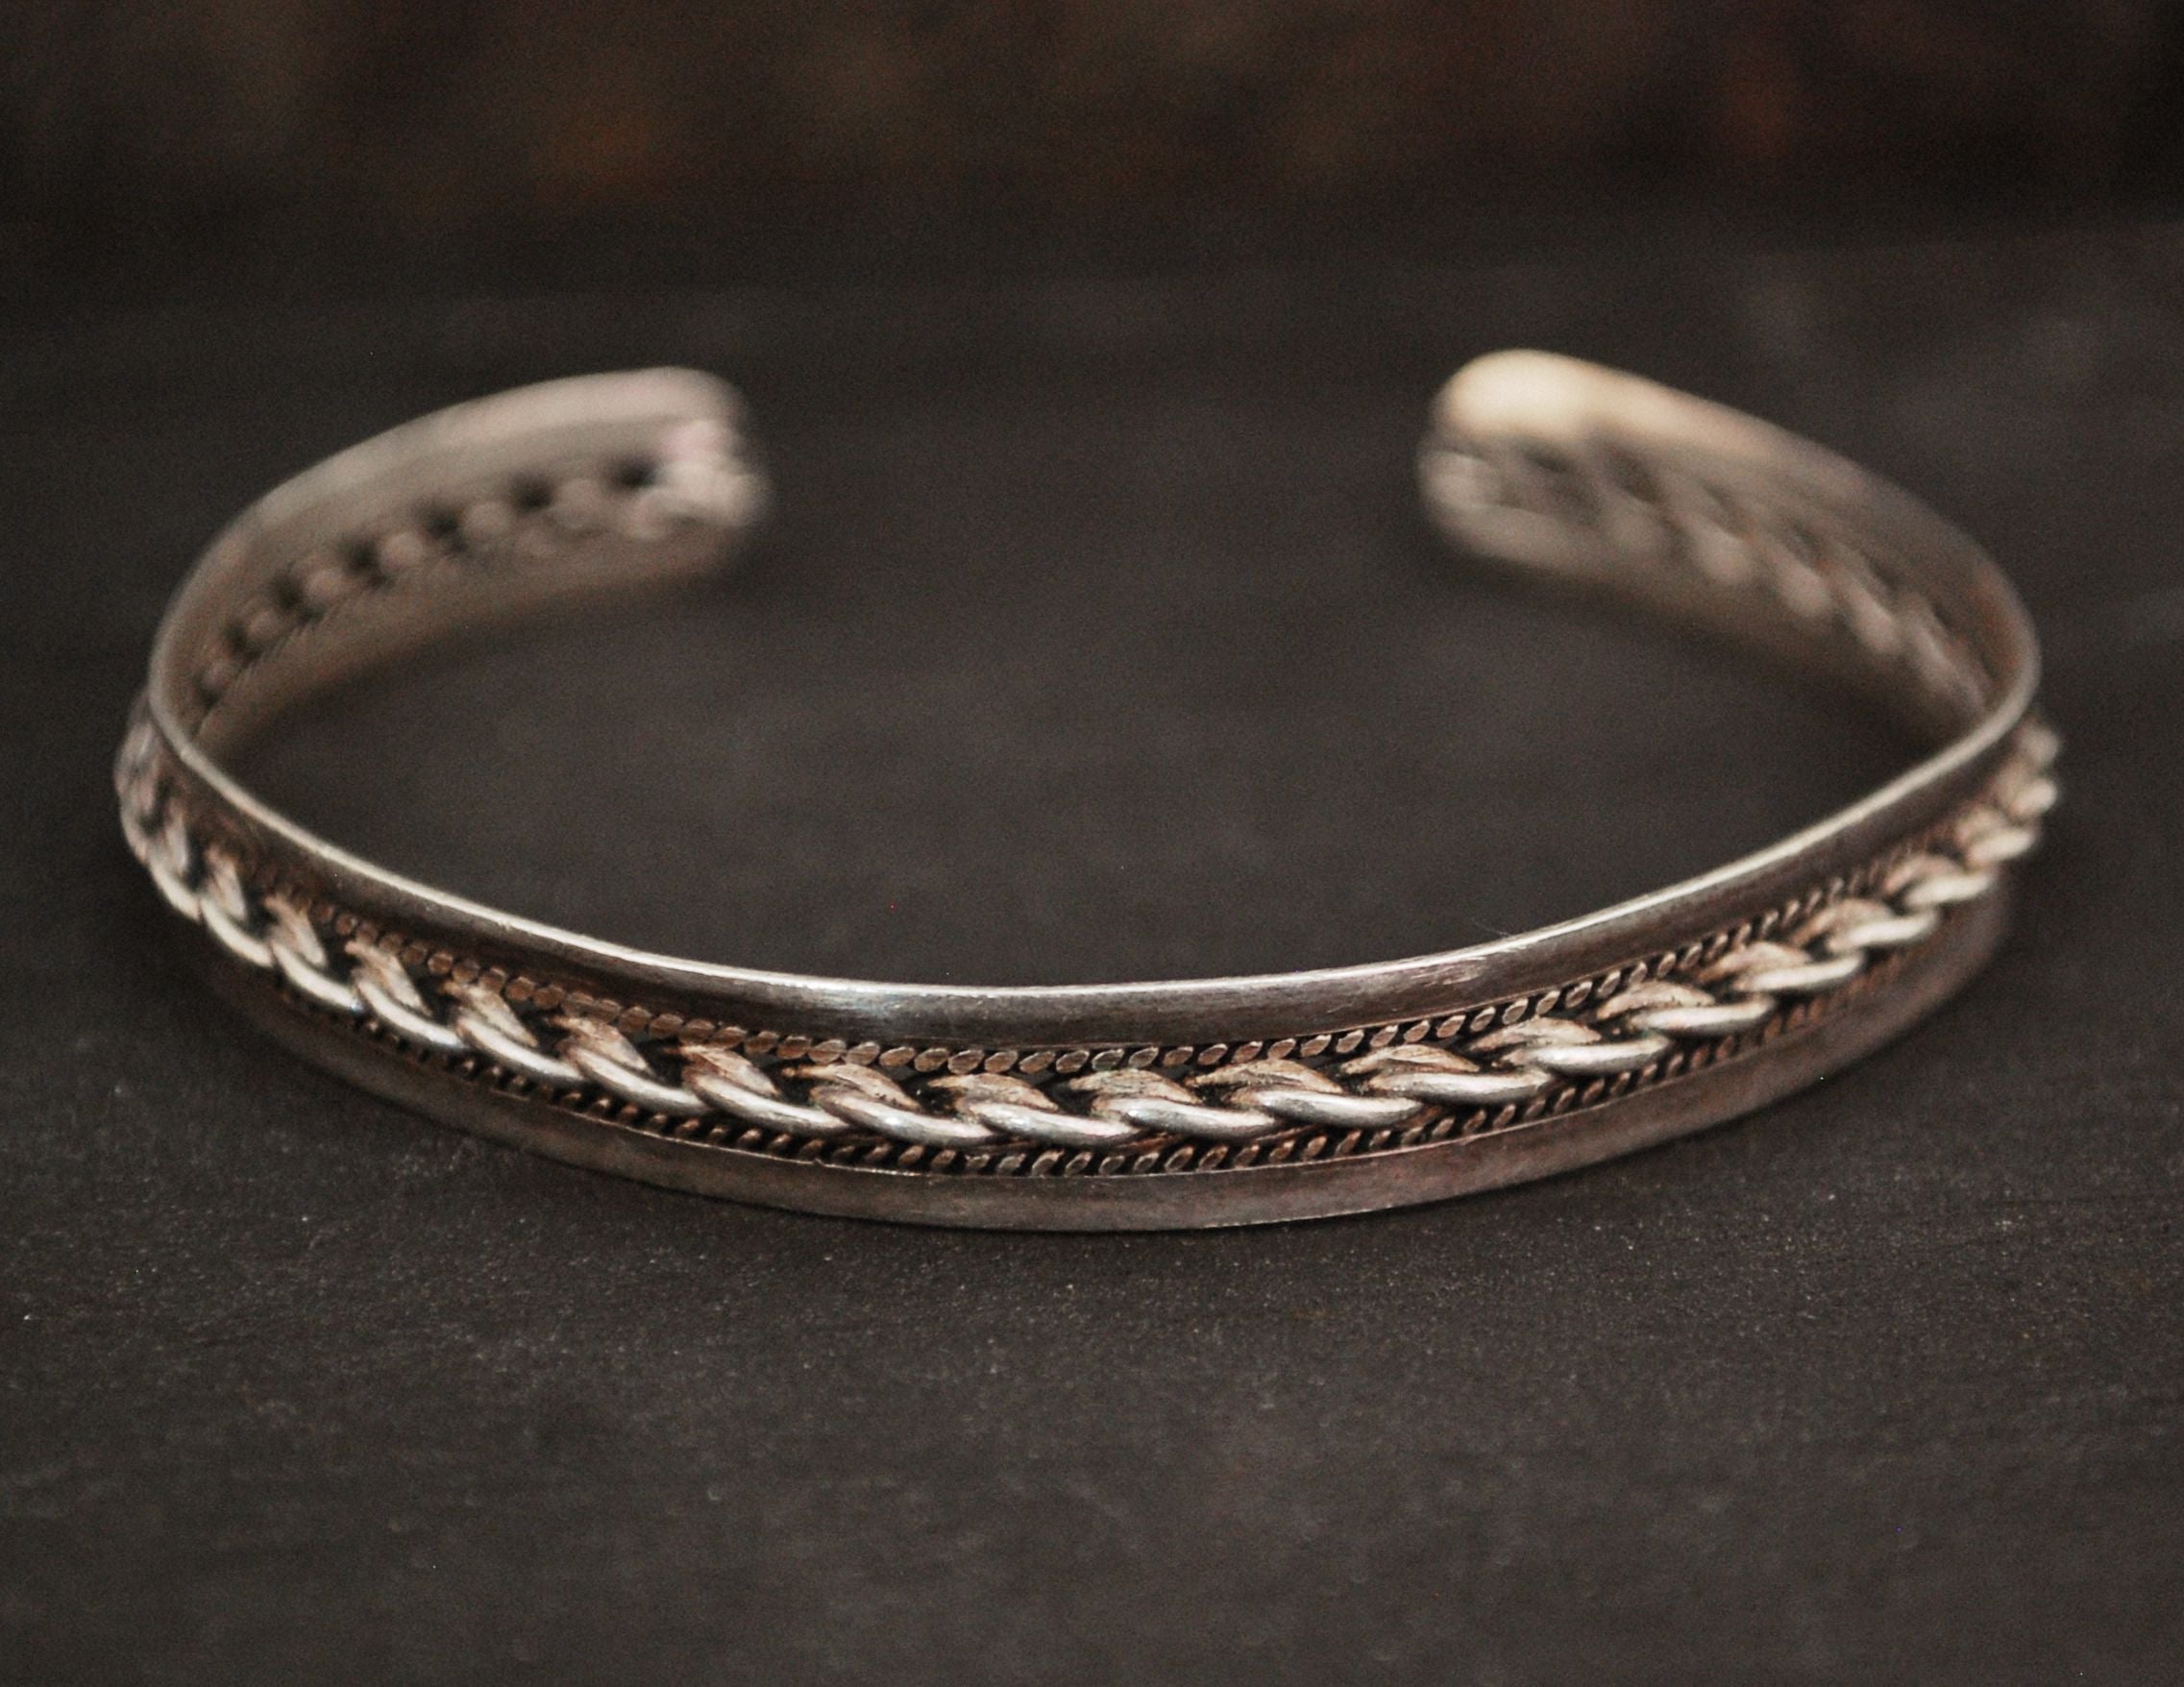 Bedouin Silver Bracelet from Egypt